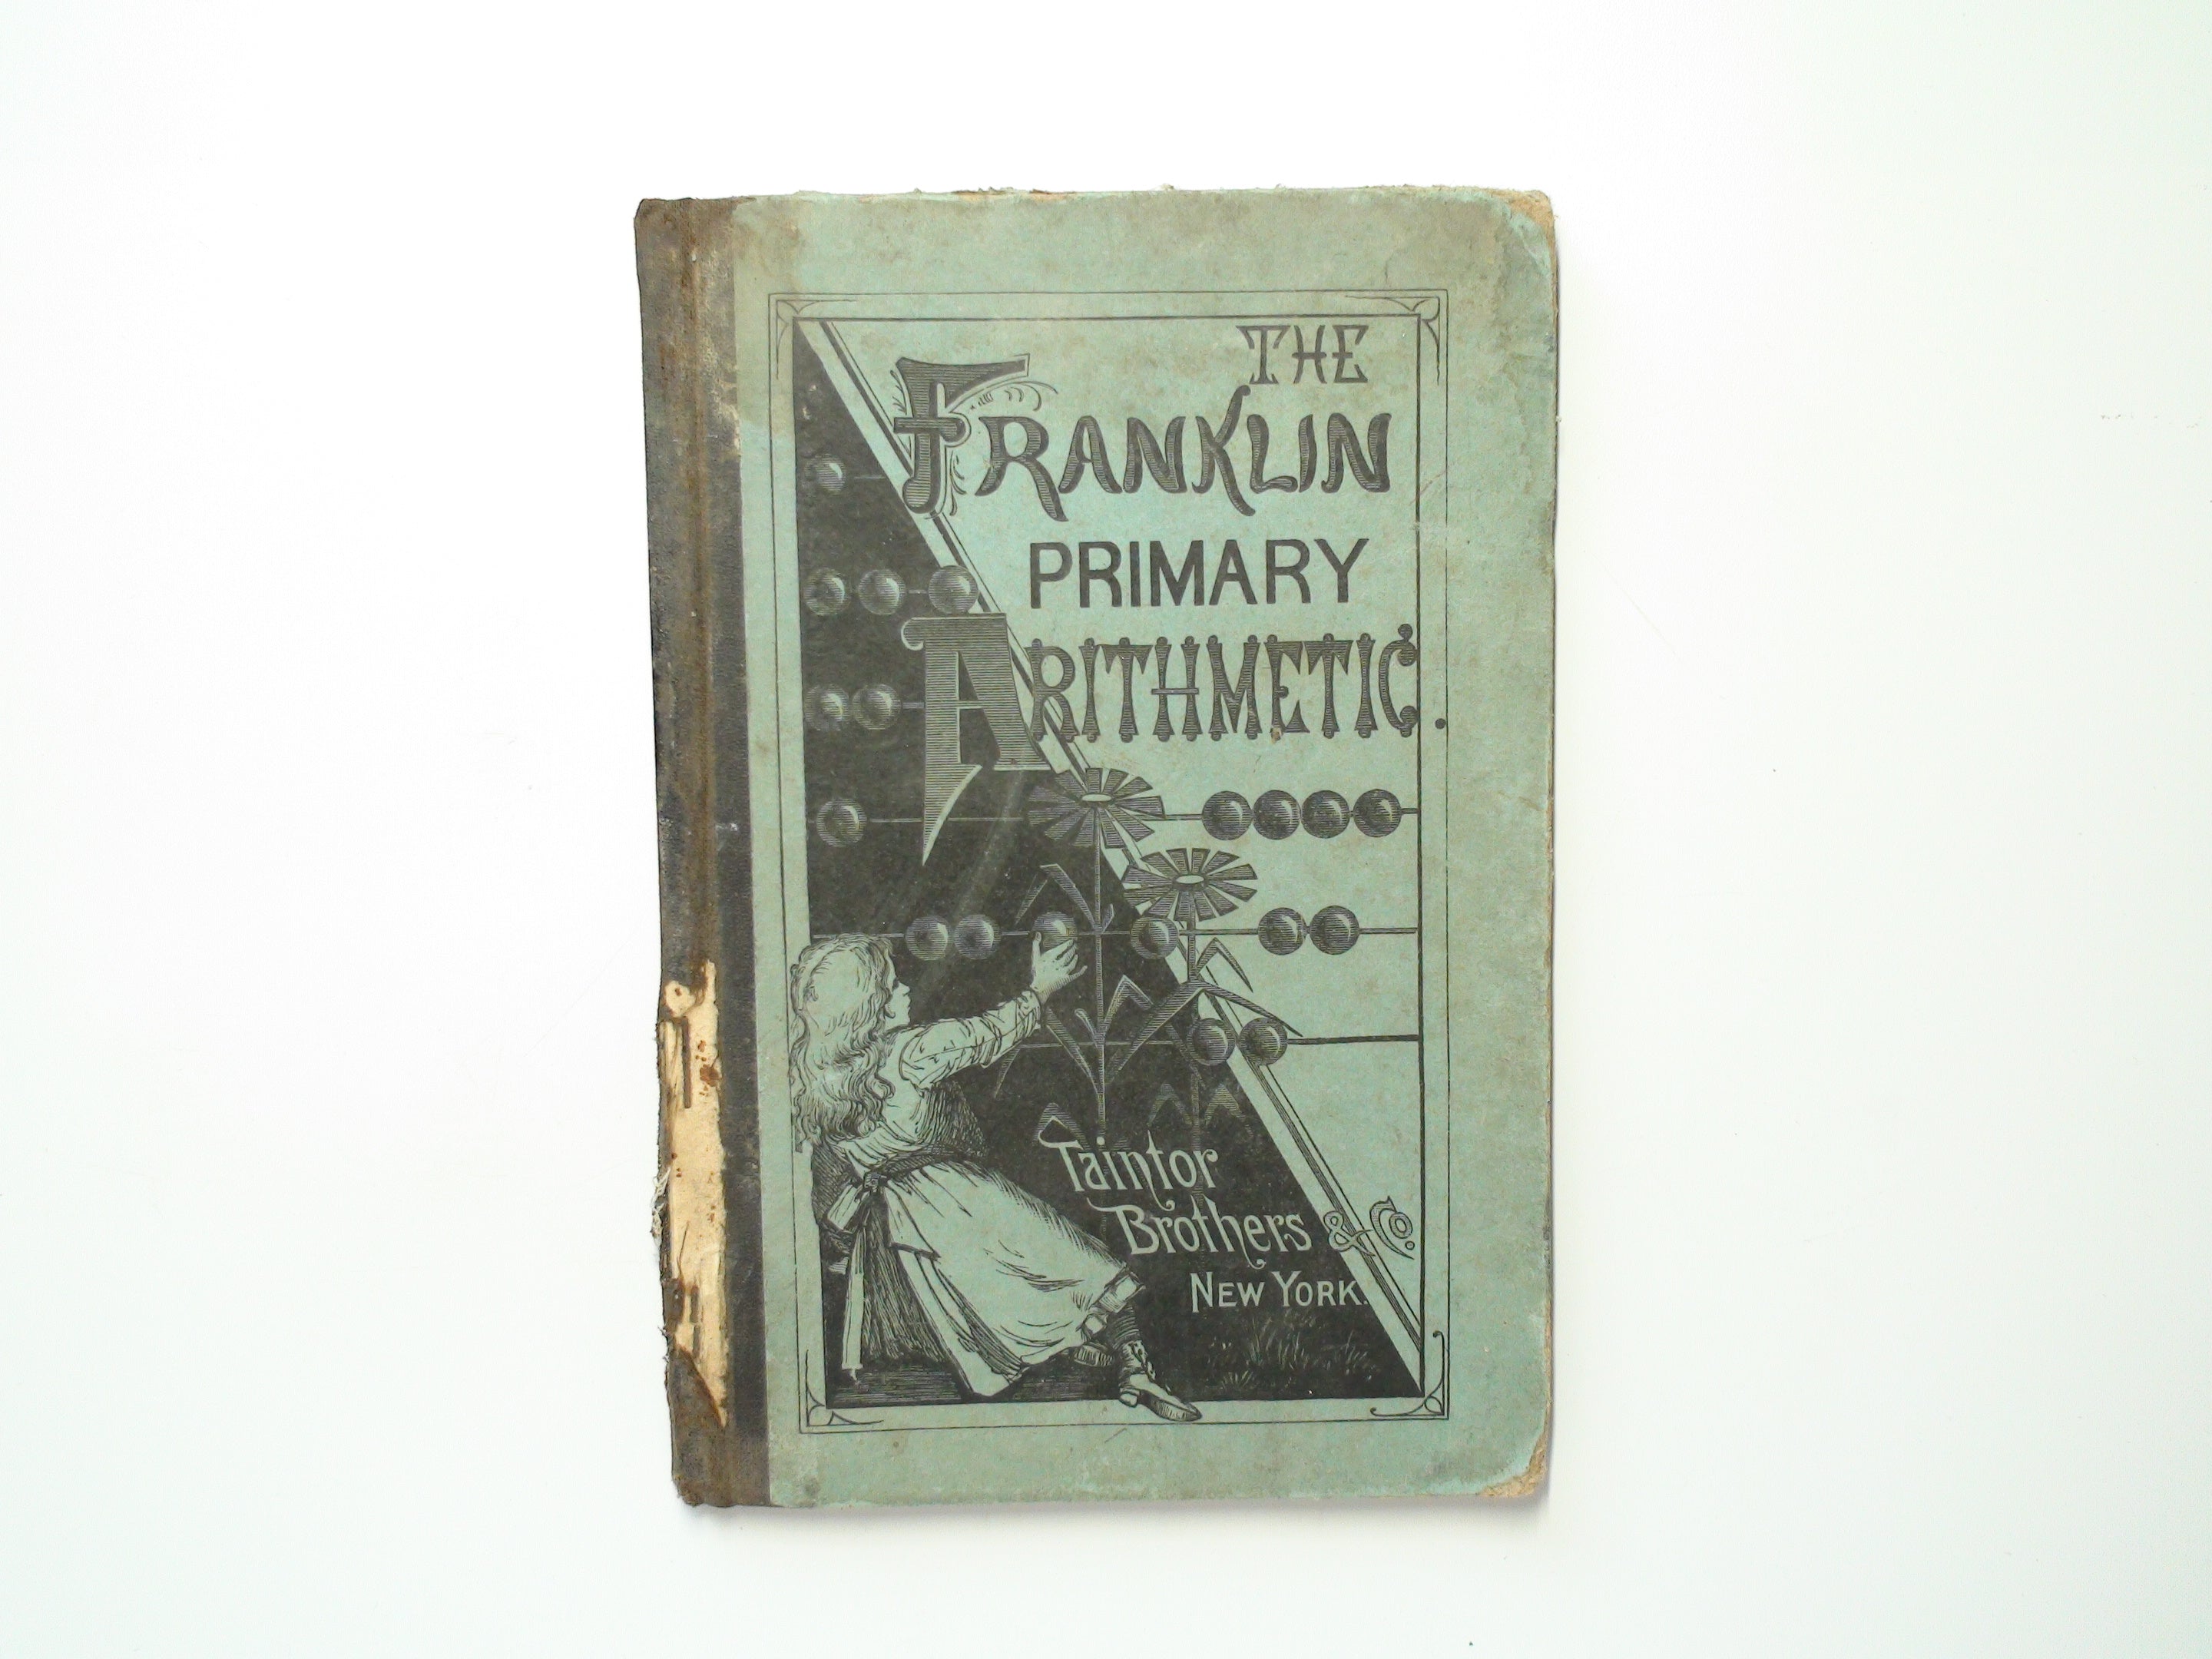 Franklin Primary Arithmetic by Edwin P. Seaver, Illustrated, Rare, 1879